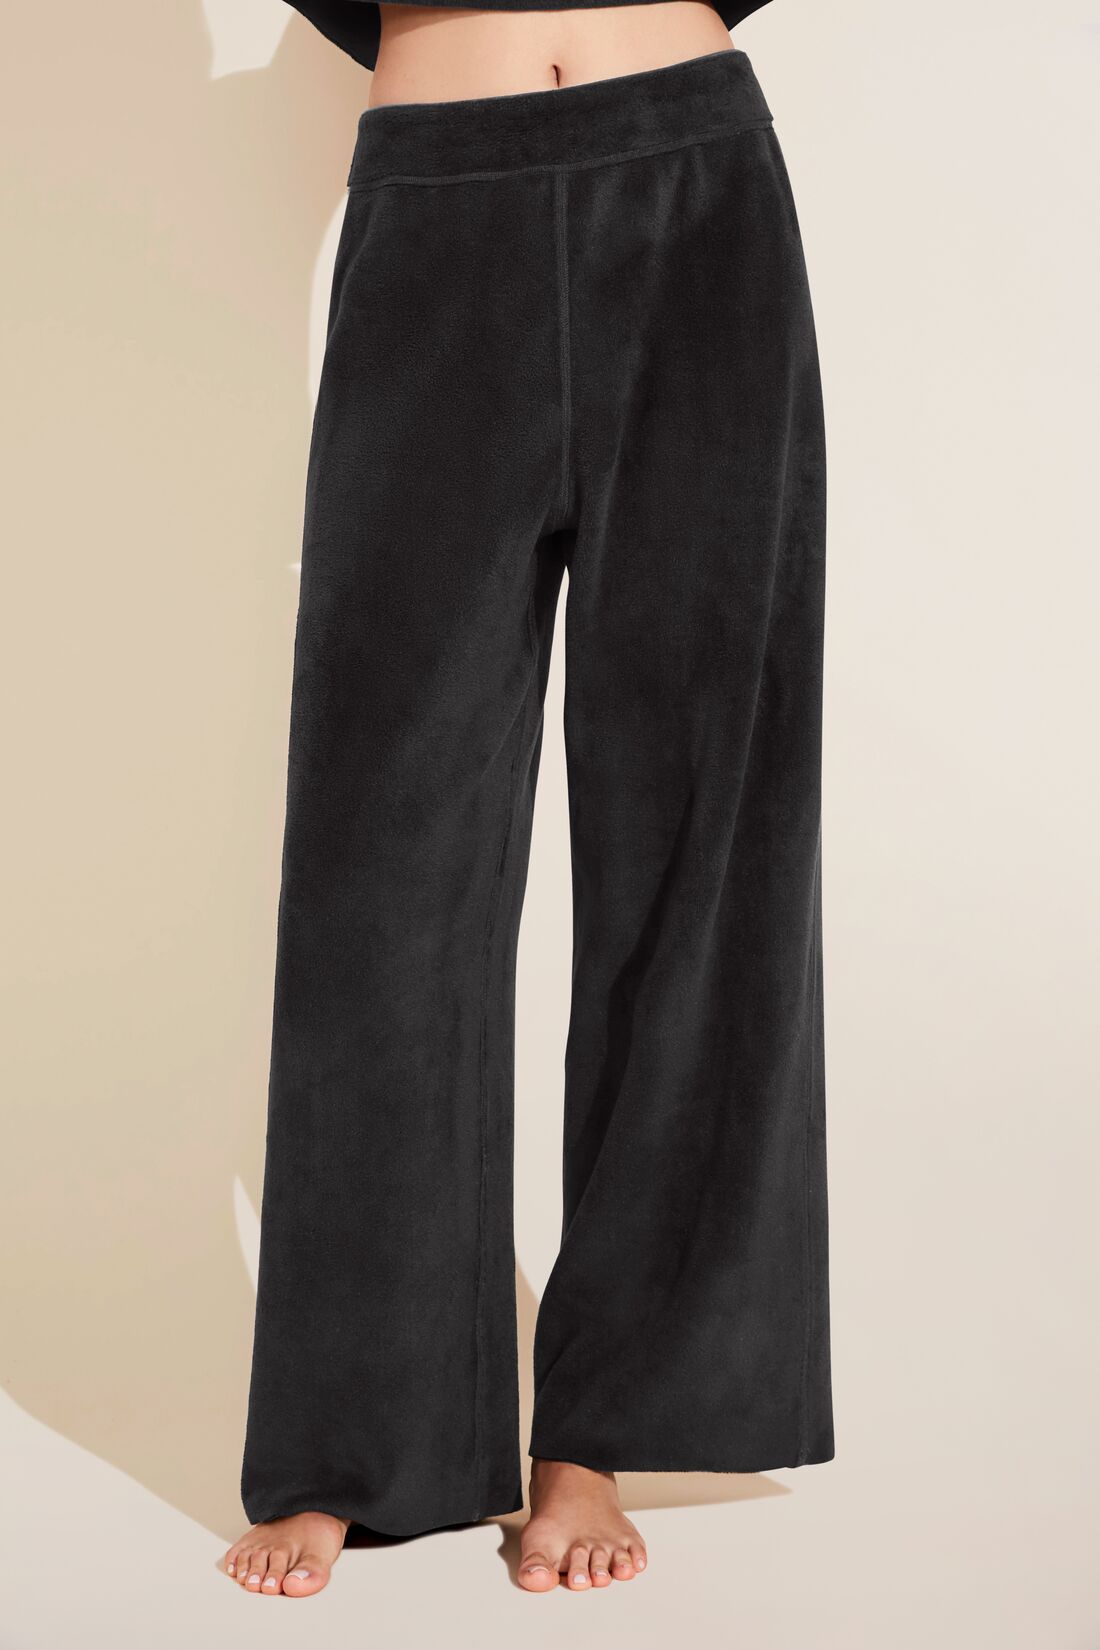 Reversible Plush High Waist Pant - Kelp/Black